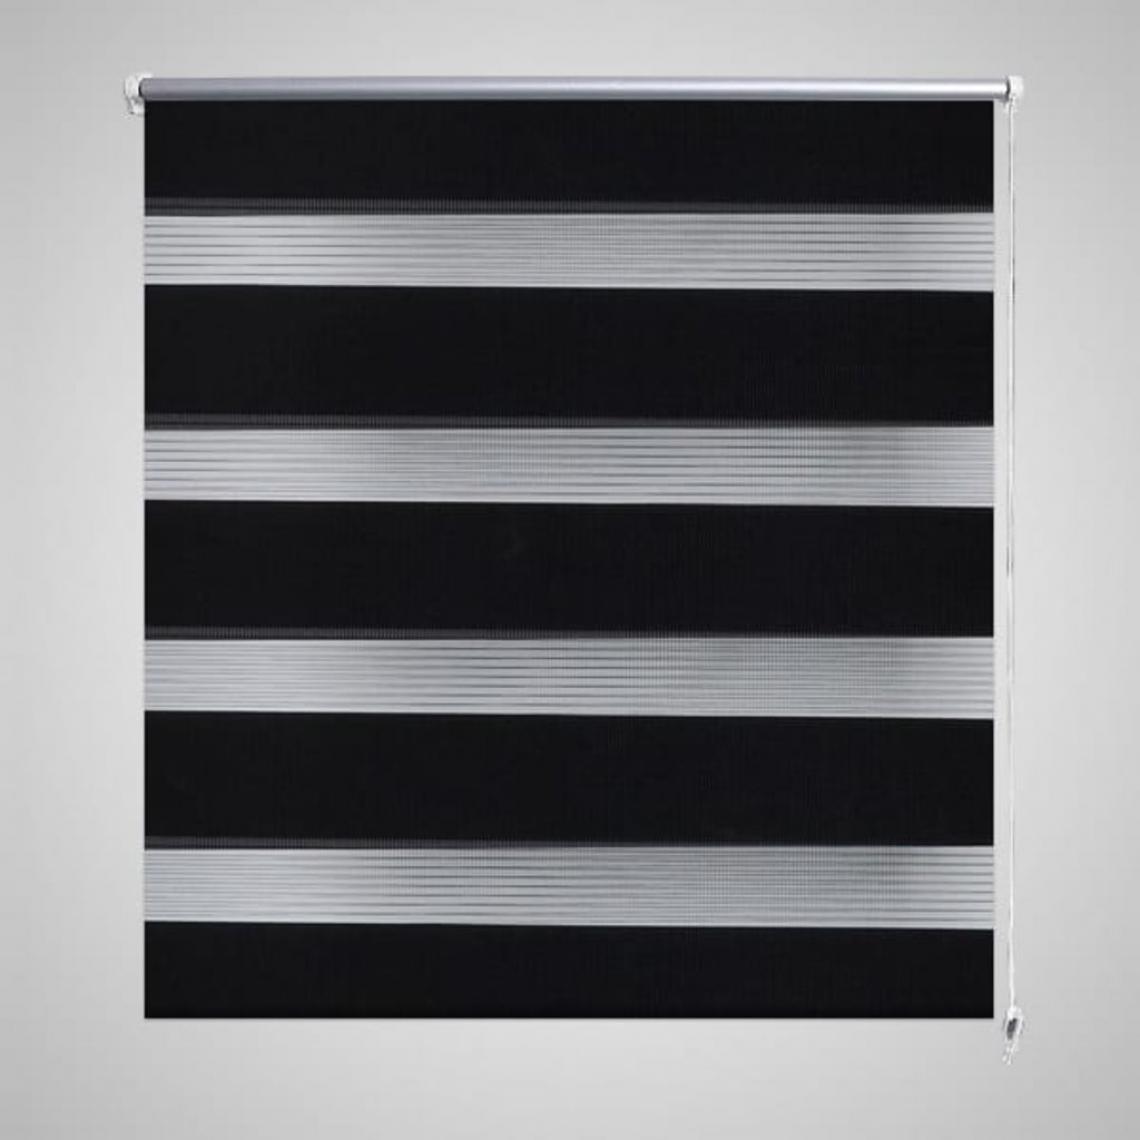 Chunhelife - Store enrouleur tamisant 60 x 120 cm noir - Store banne